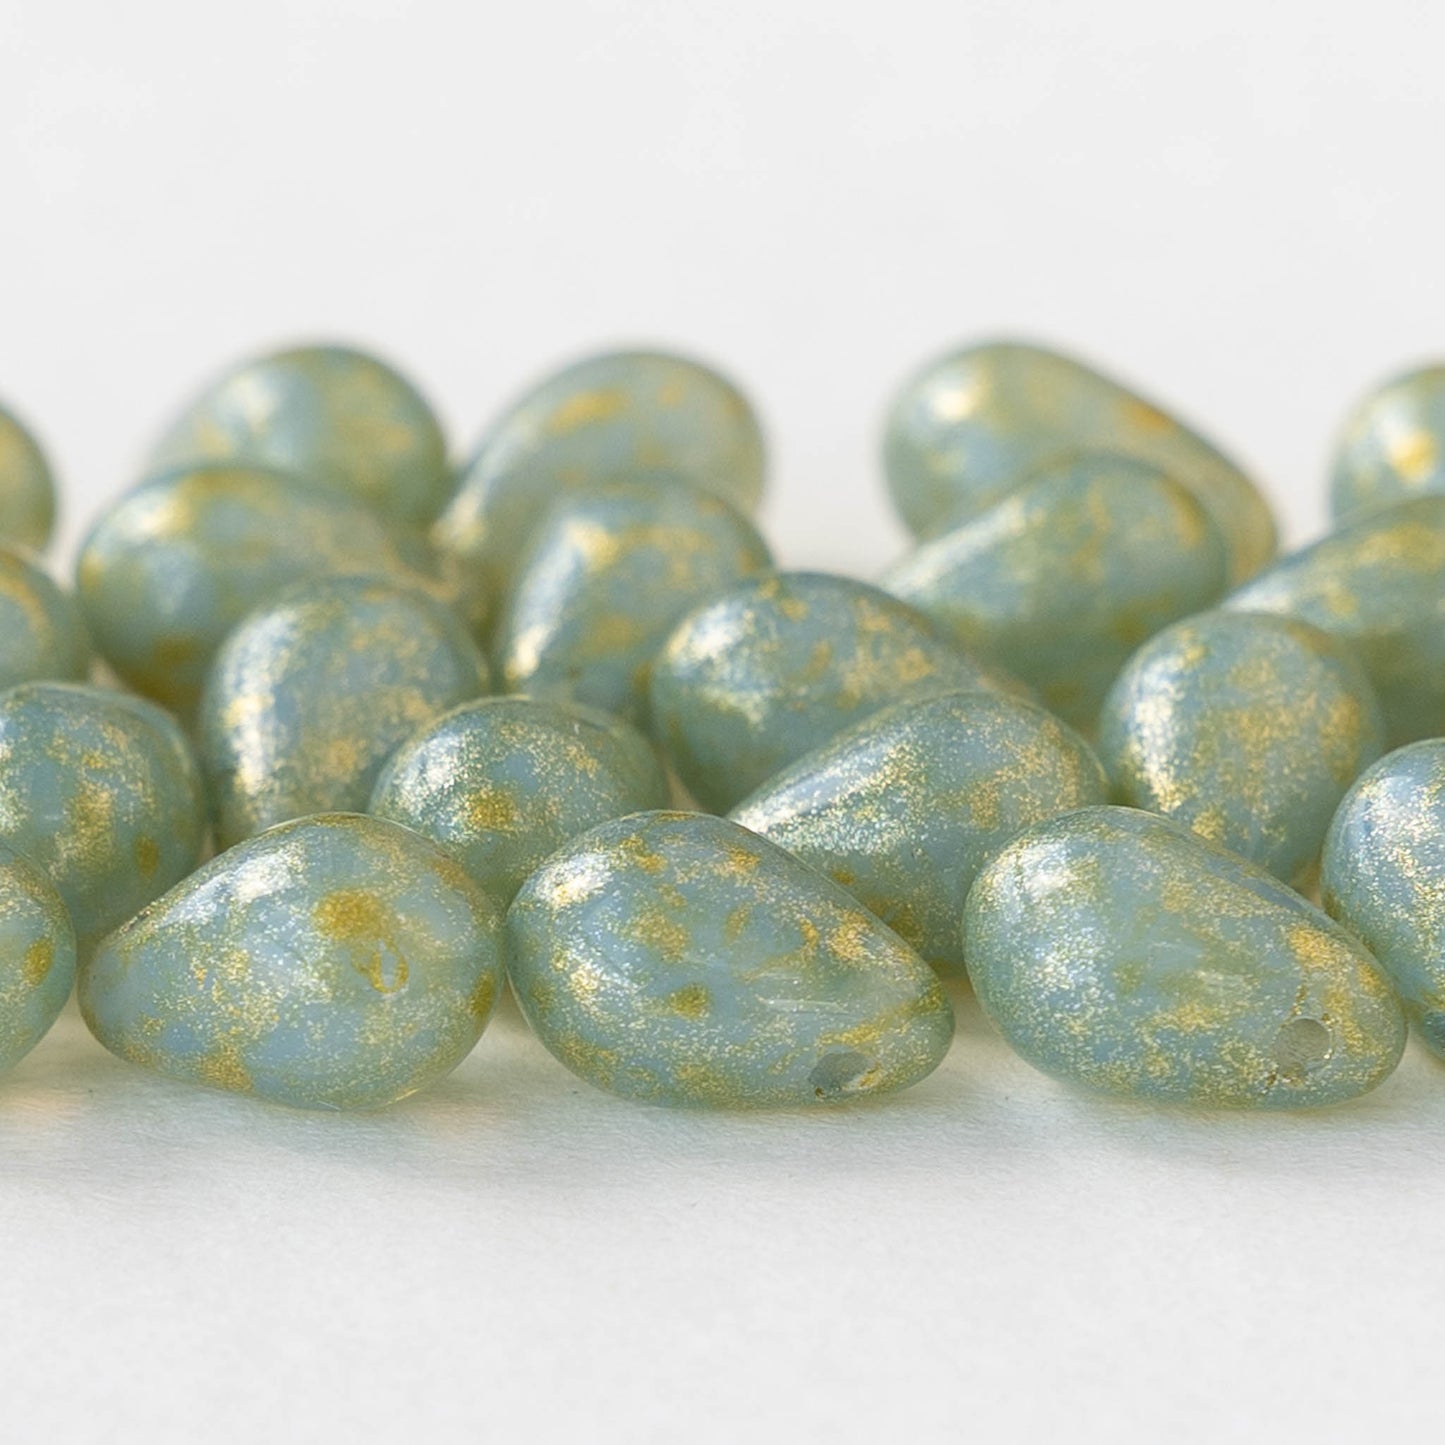 6x9mm Glass Teardrop Beads - Opal Seafoam with Gold Dust - 30 Beads